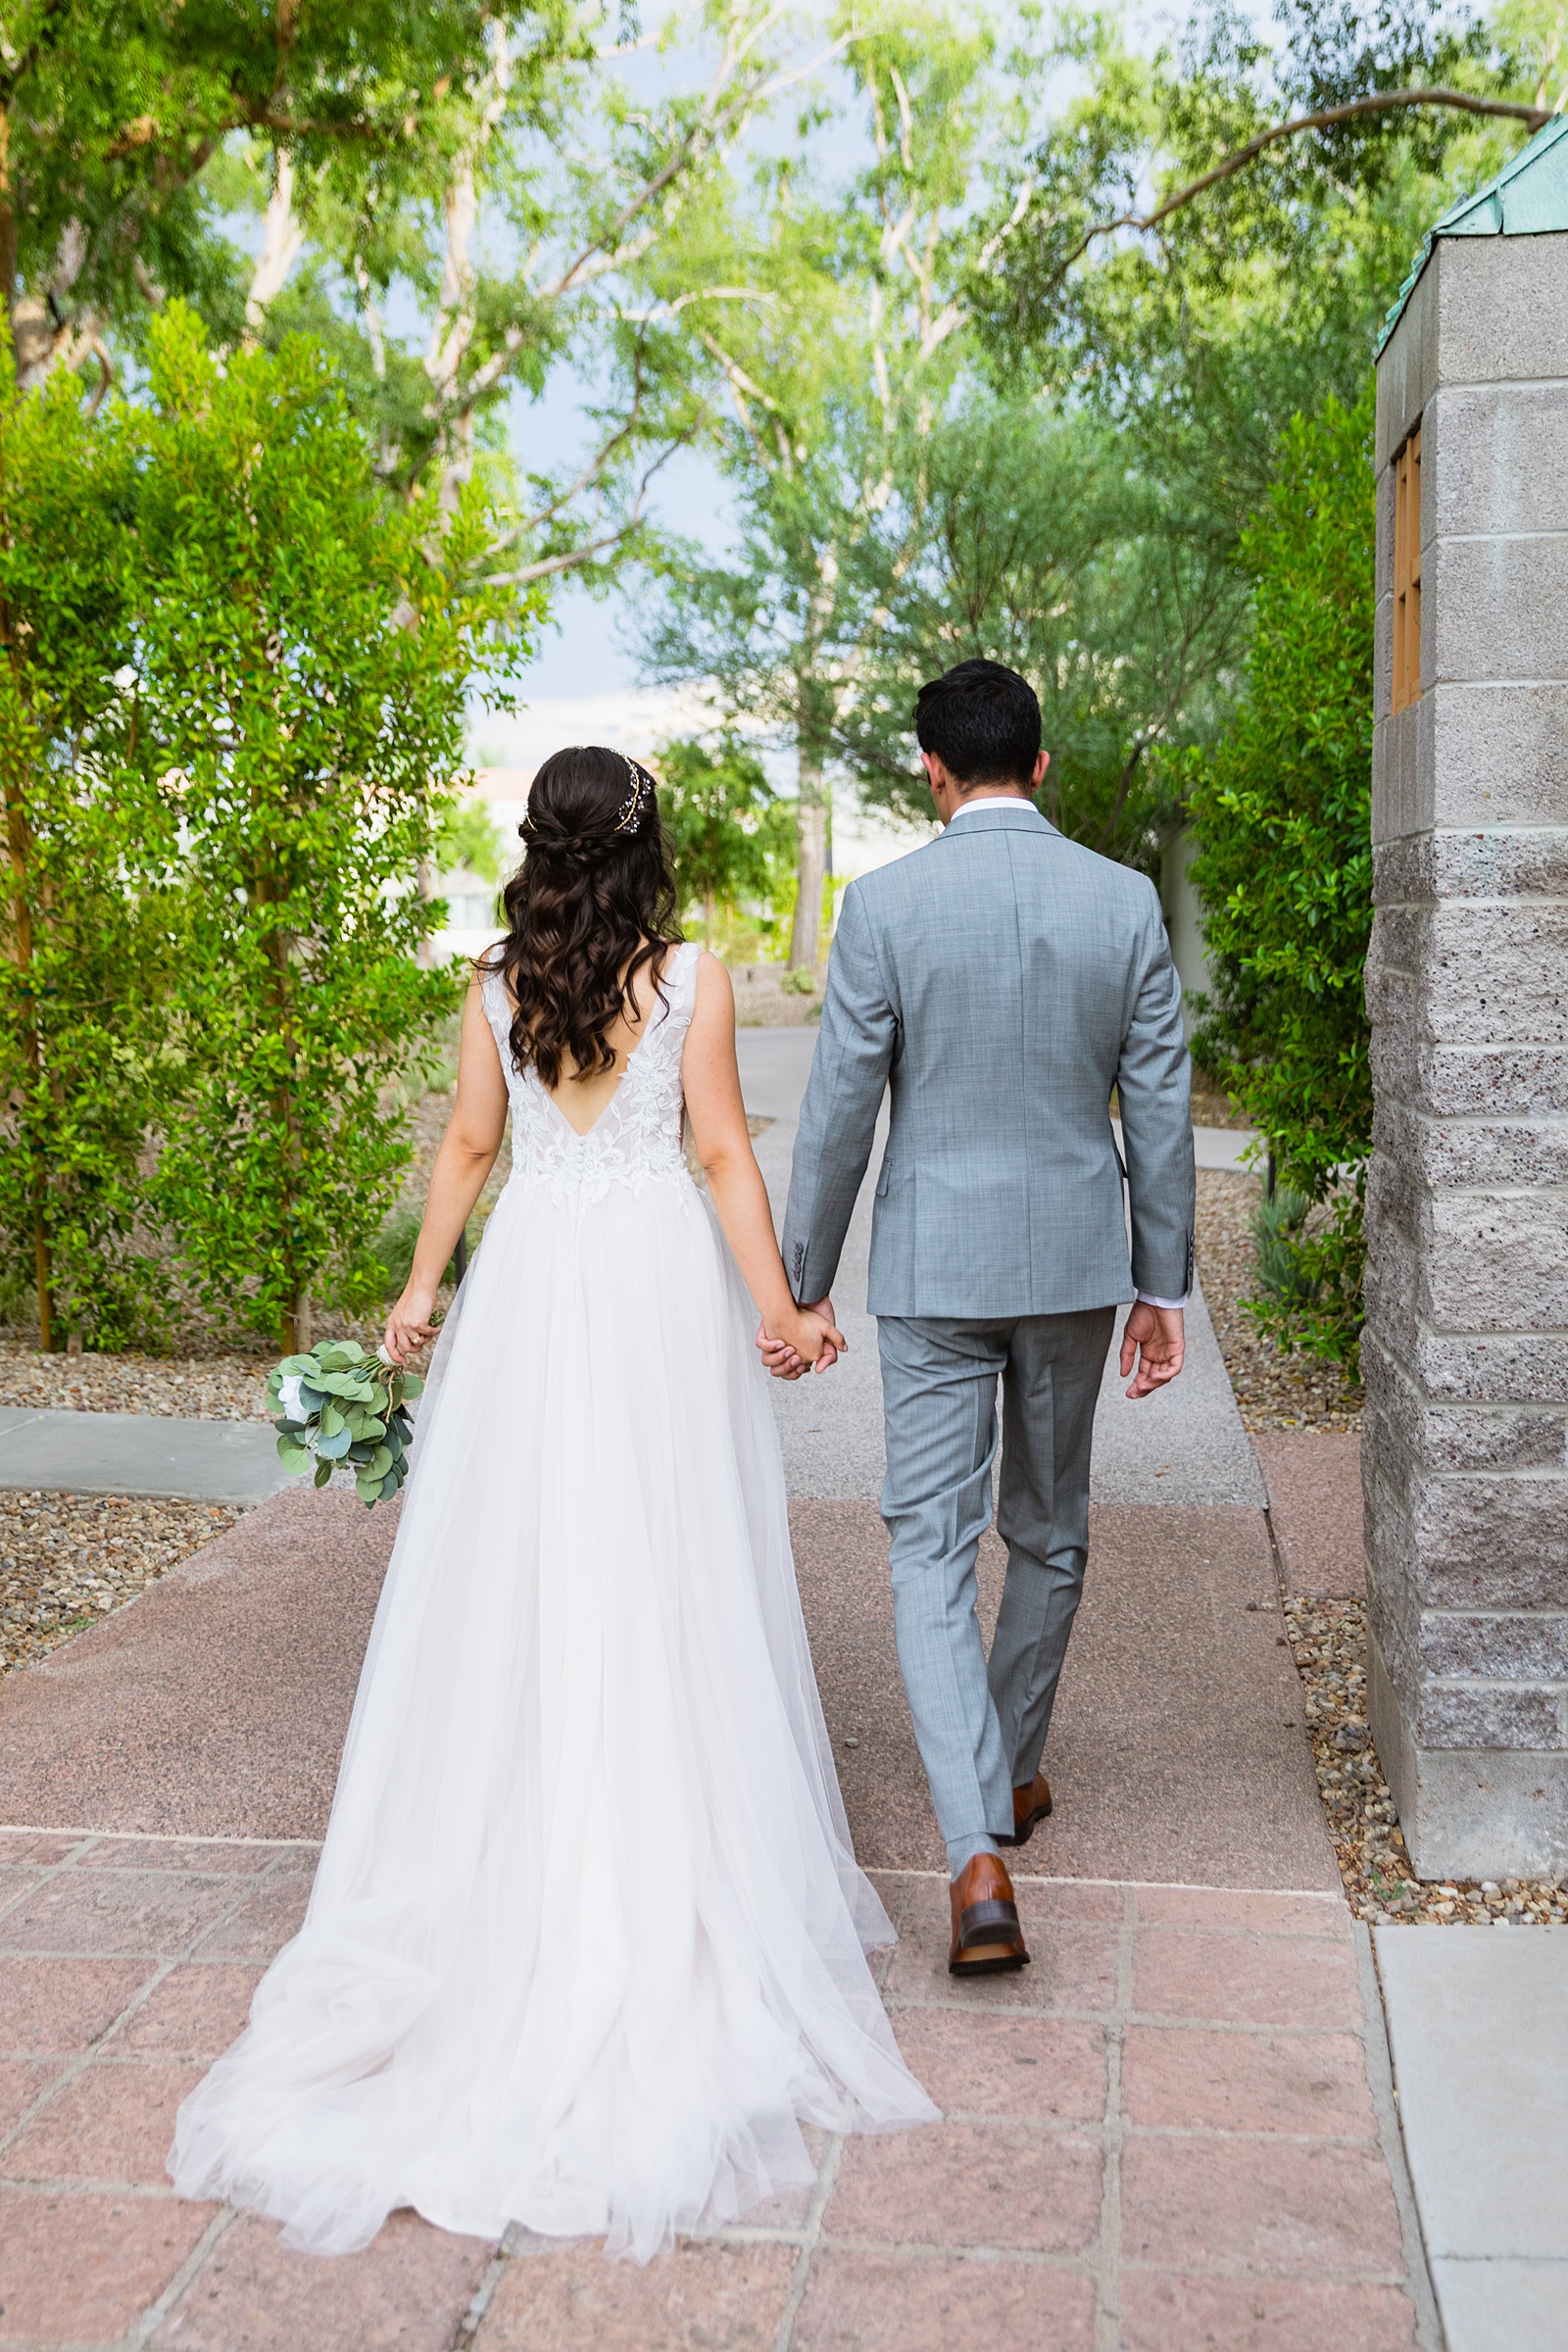 Bride and groom walking together during their Hyatt Regency Scottsdale Resort & Spa At Gainey Ranch wedding by Arizona wedding photographer PMA Photography.